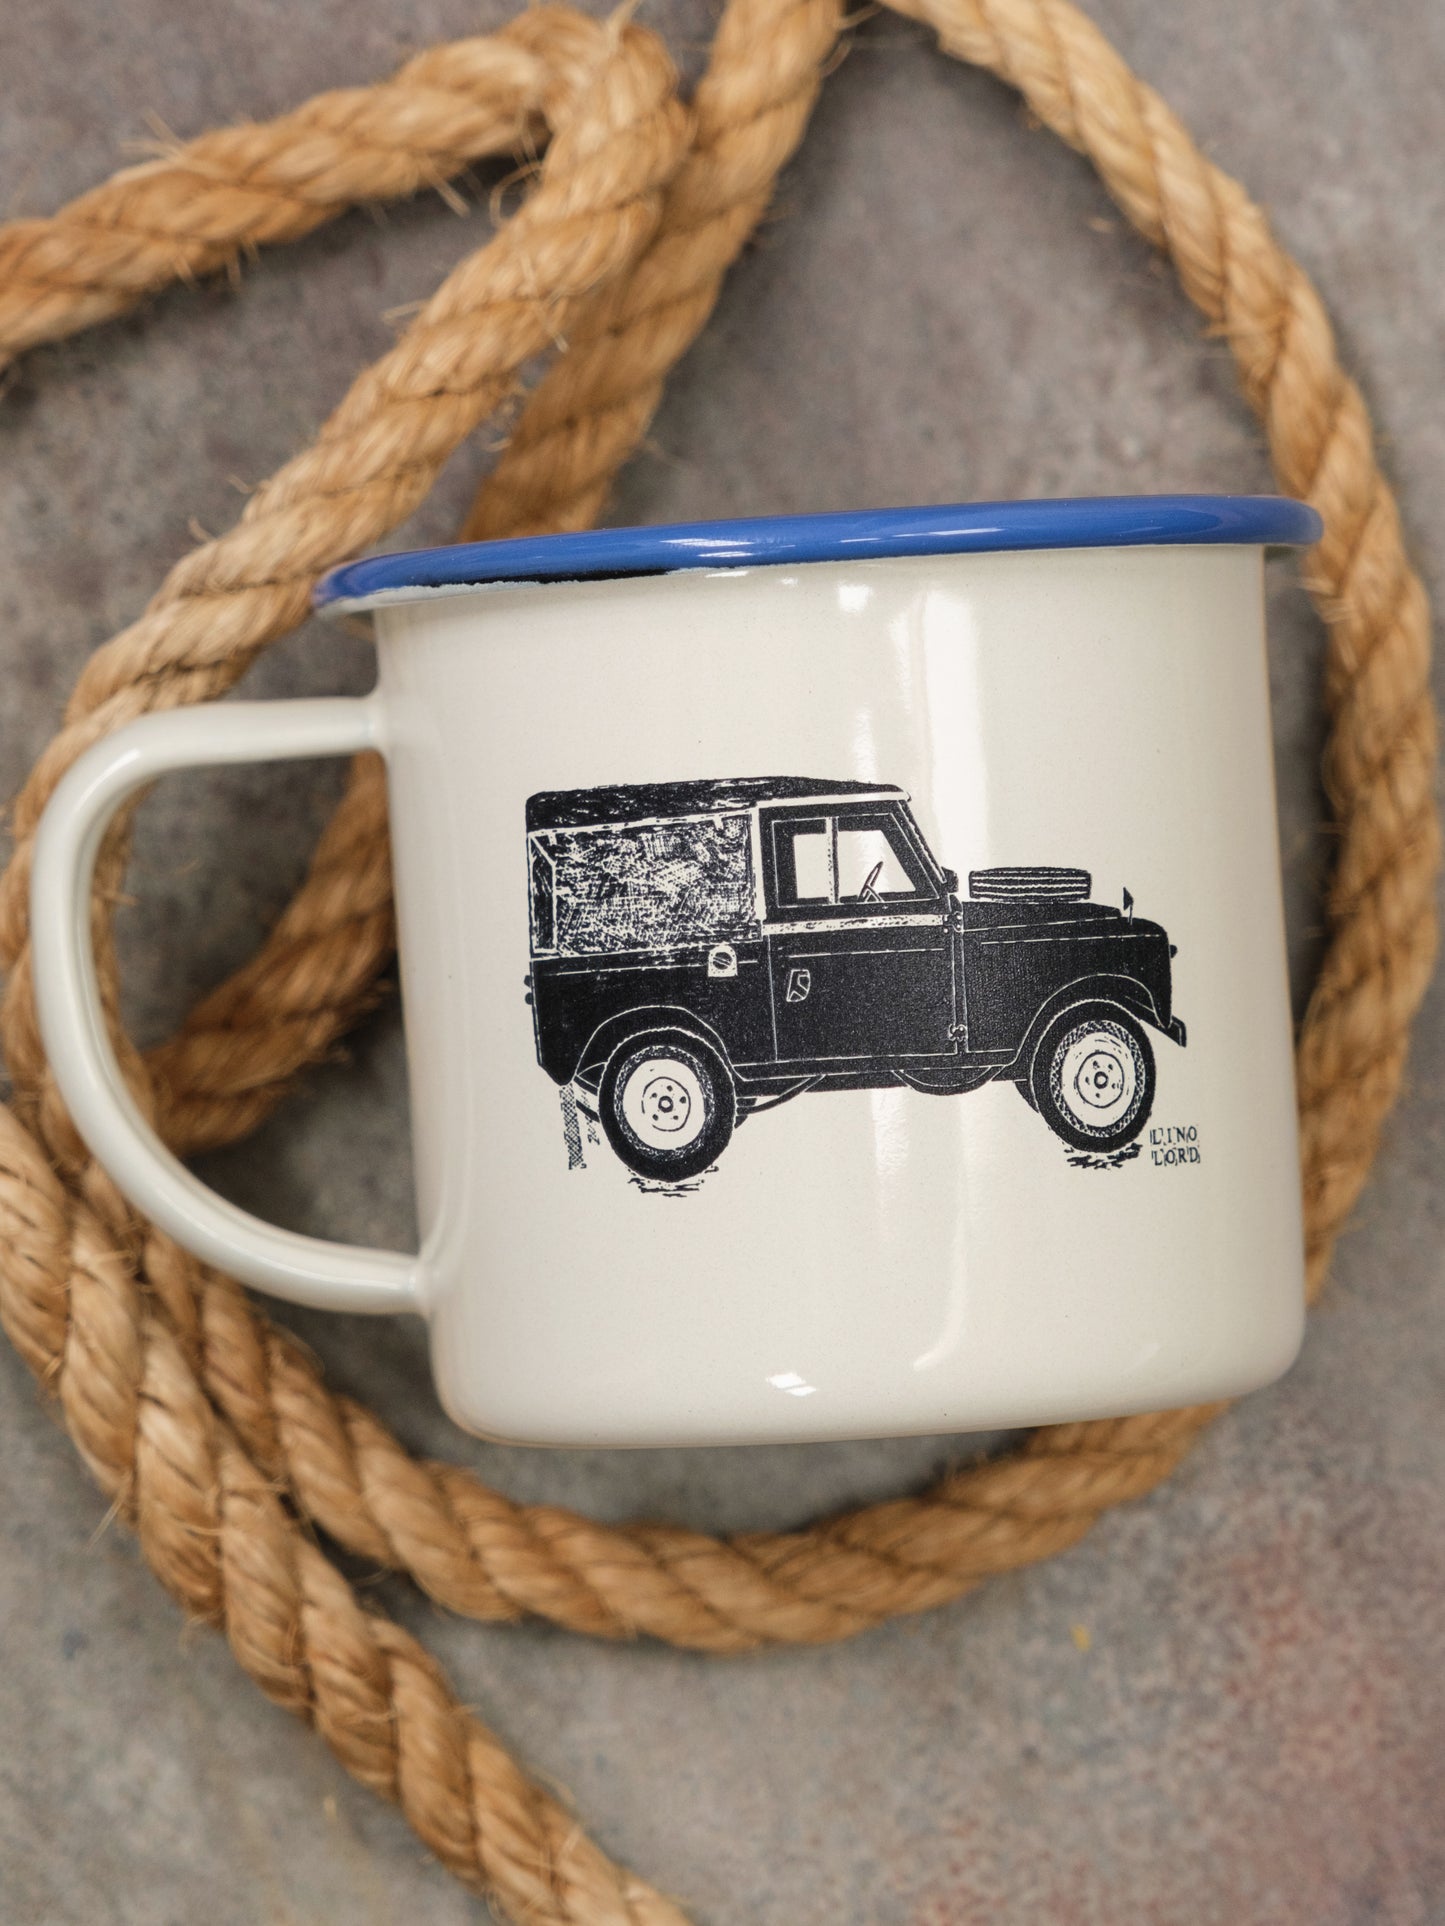 Cream Enamel Mug with Land Rover Design